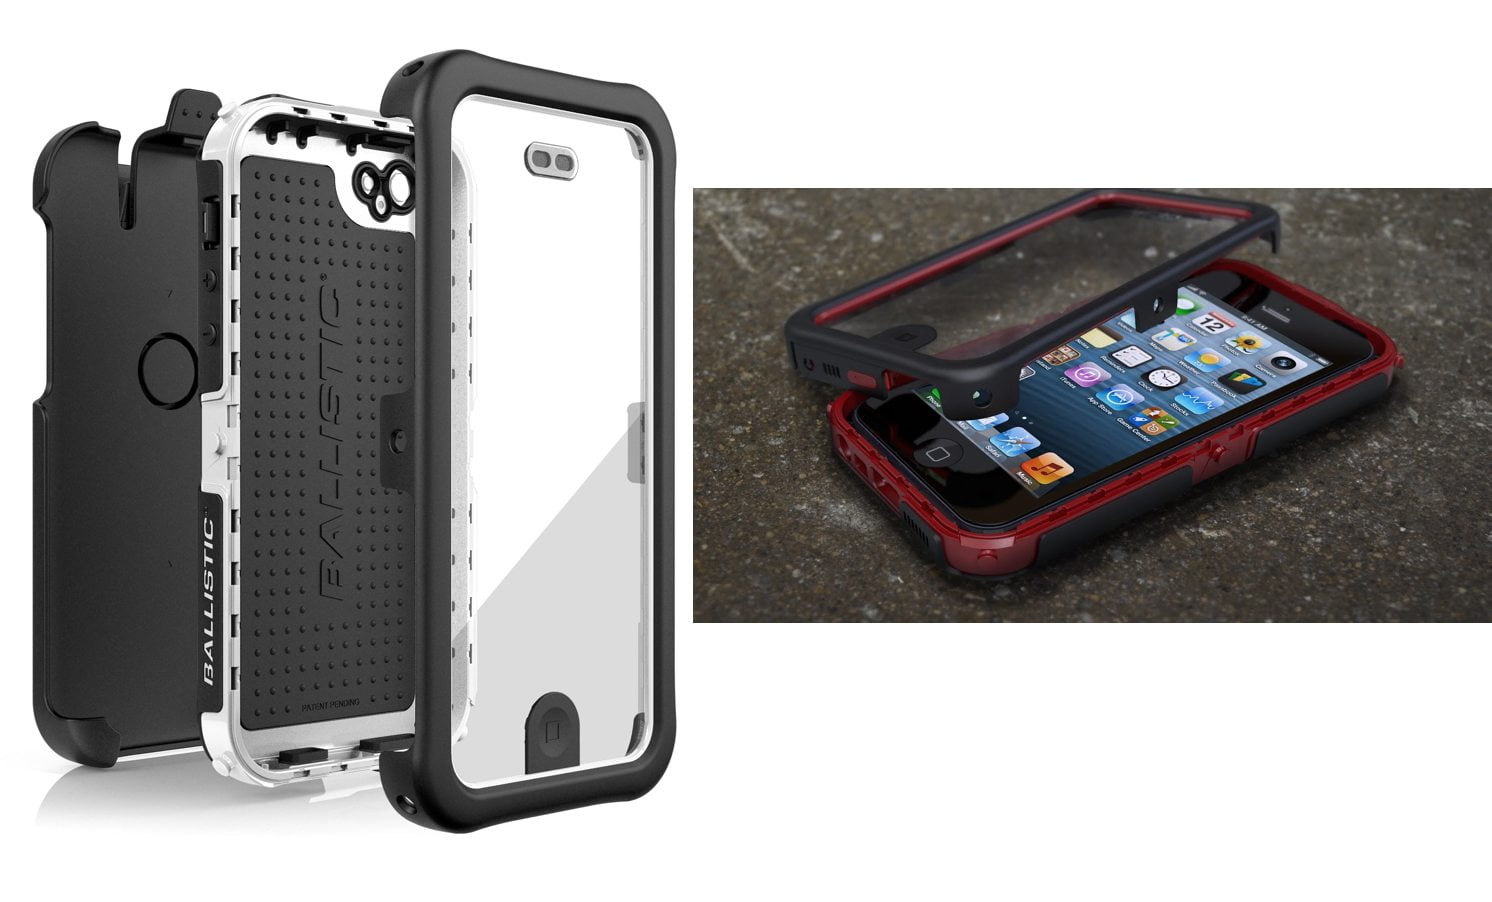 iPhone 5 Ballistic HYDRA Series Waterproof Case Review